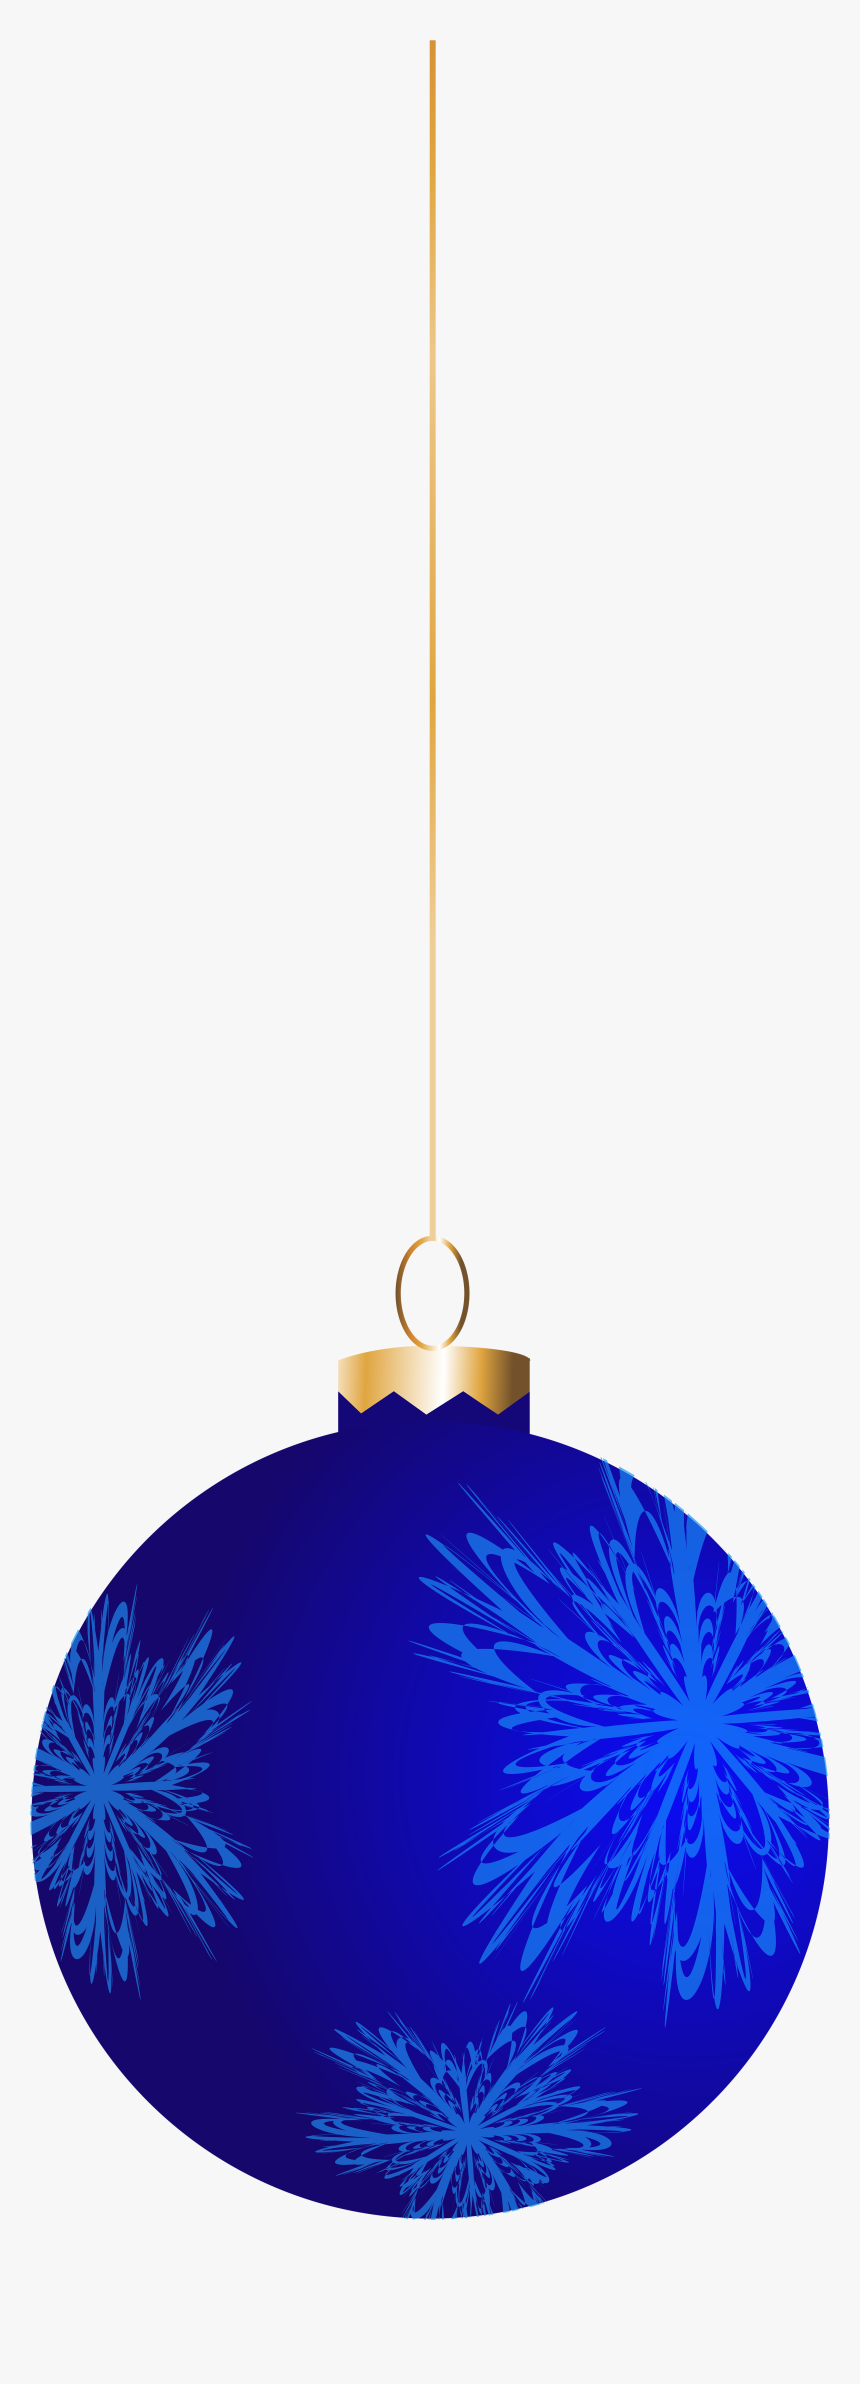 Blue Christmas Balls Png Download - Blue Christmas Balls Png, Transparent Png, Free Download